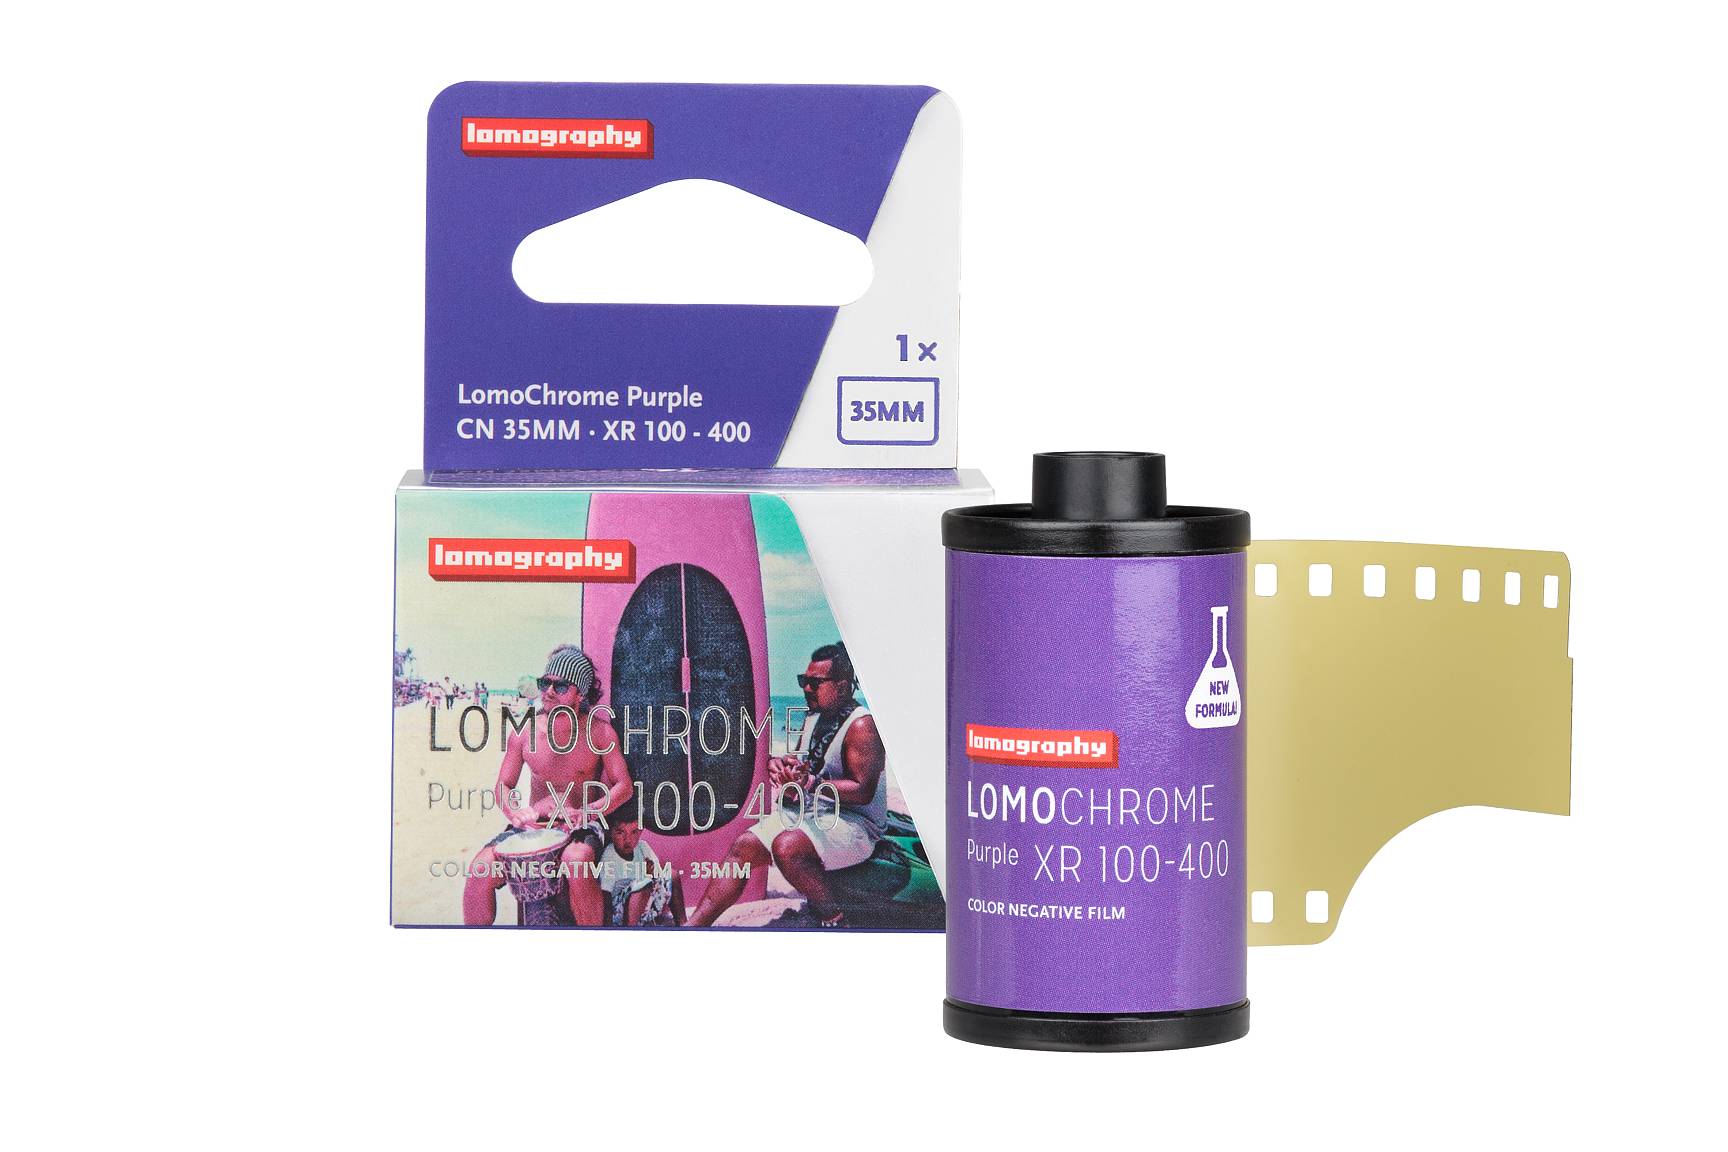 Lomography Announces a Brand New Formula for LomoChrome Purple 400